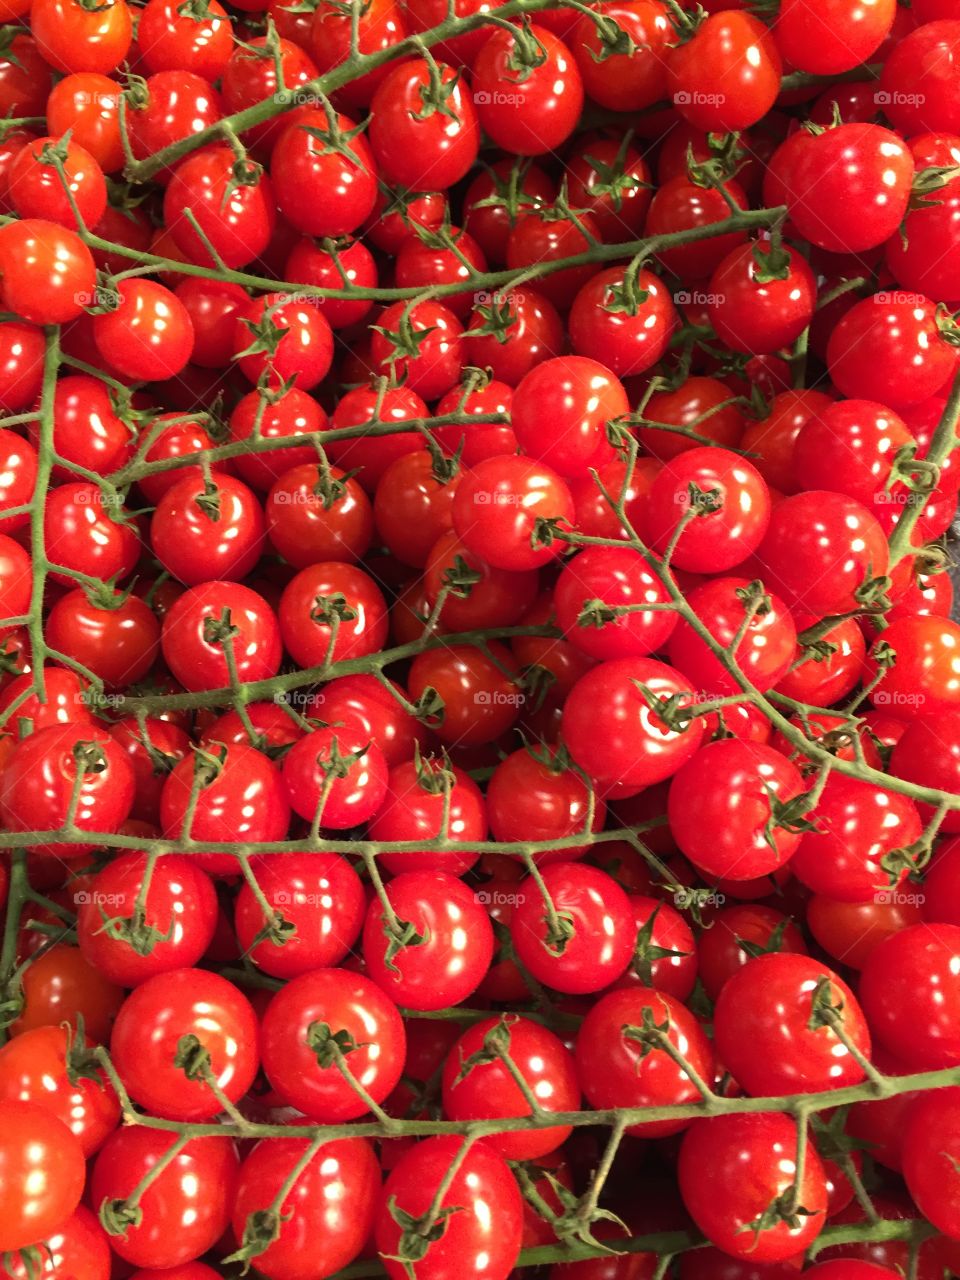 Cherry Tomatoes
Paris, France